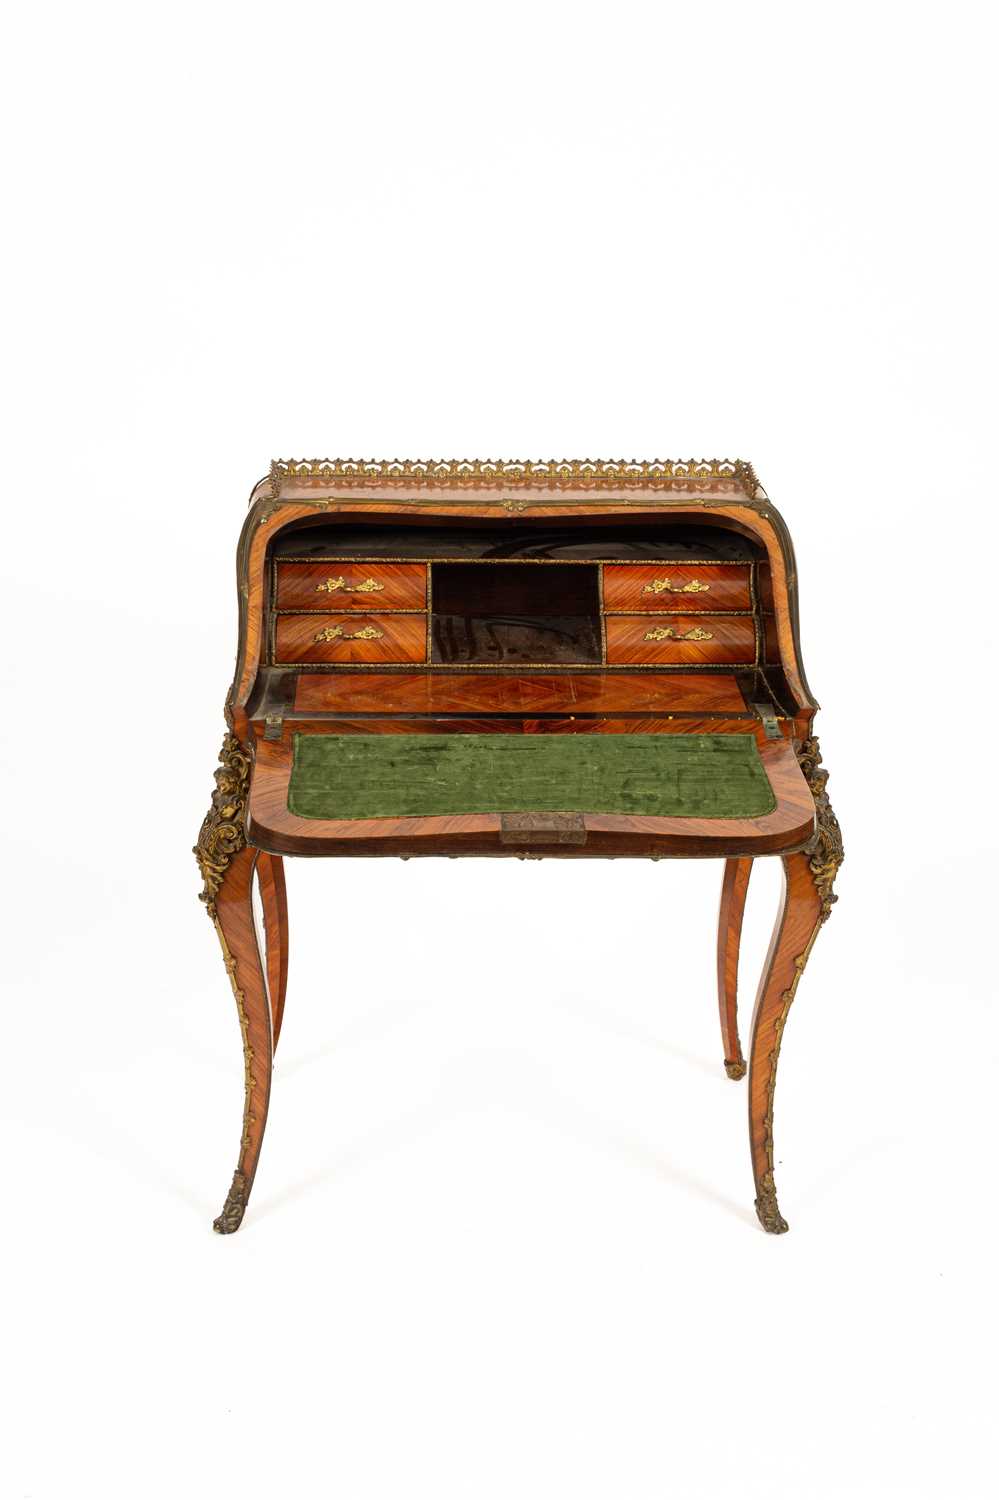 A Louis XV style ormolu mounted kingwood bureau de dame - Image 3 of 20